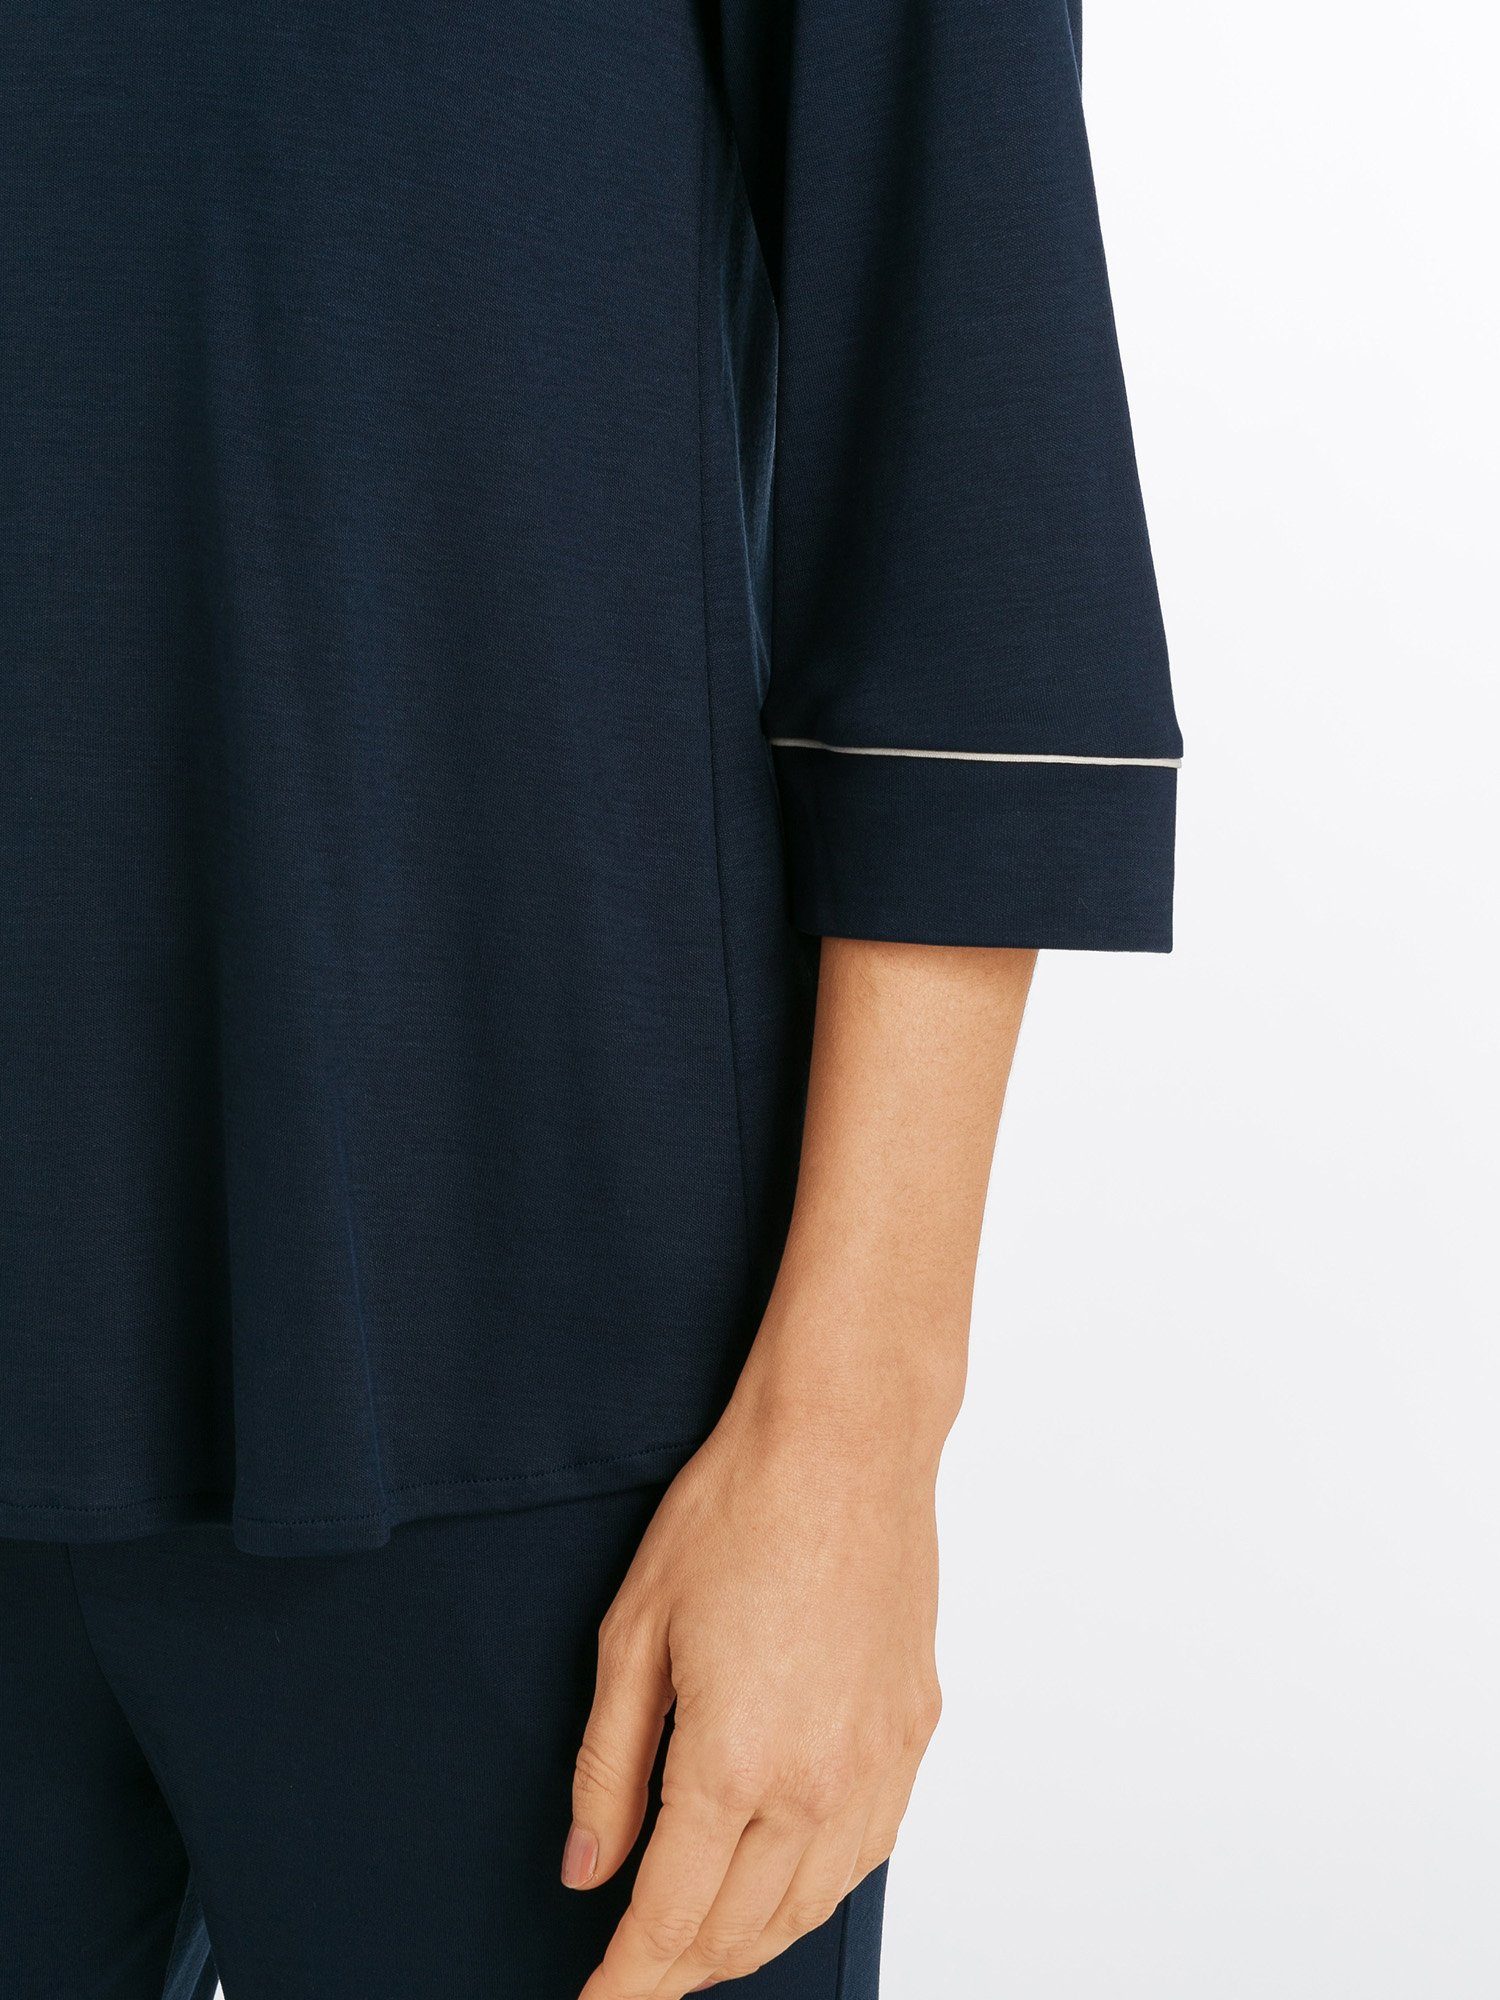 tlg) Pyjama Comfort, Arm Hanro 3/4 (1 navy Natural deep